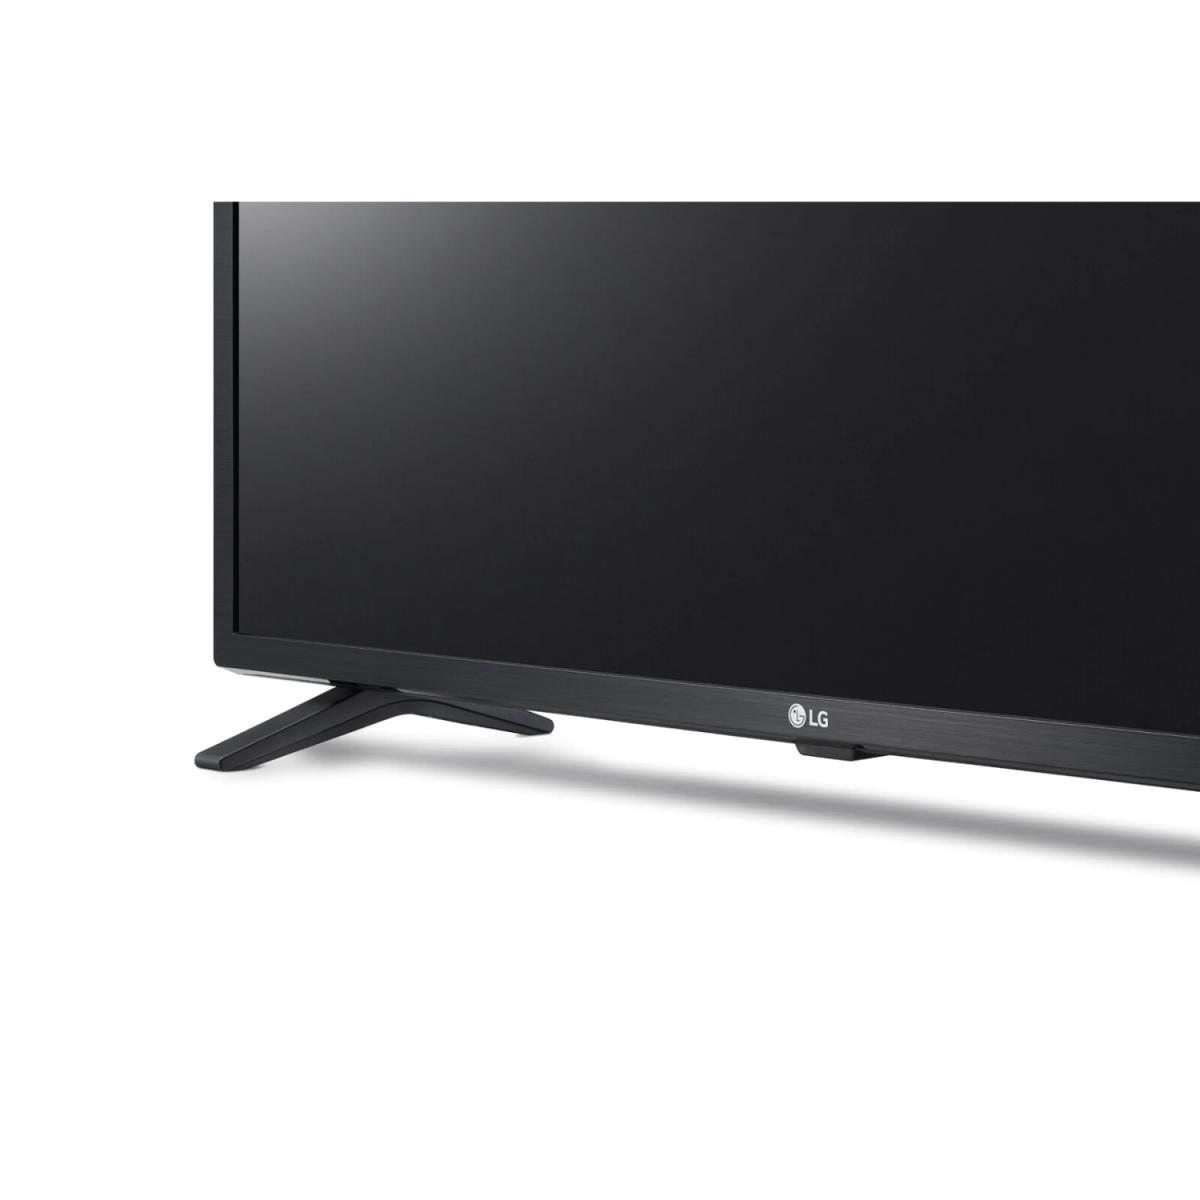 TV LG LED 32" SMART AI THINQ HD